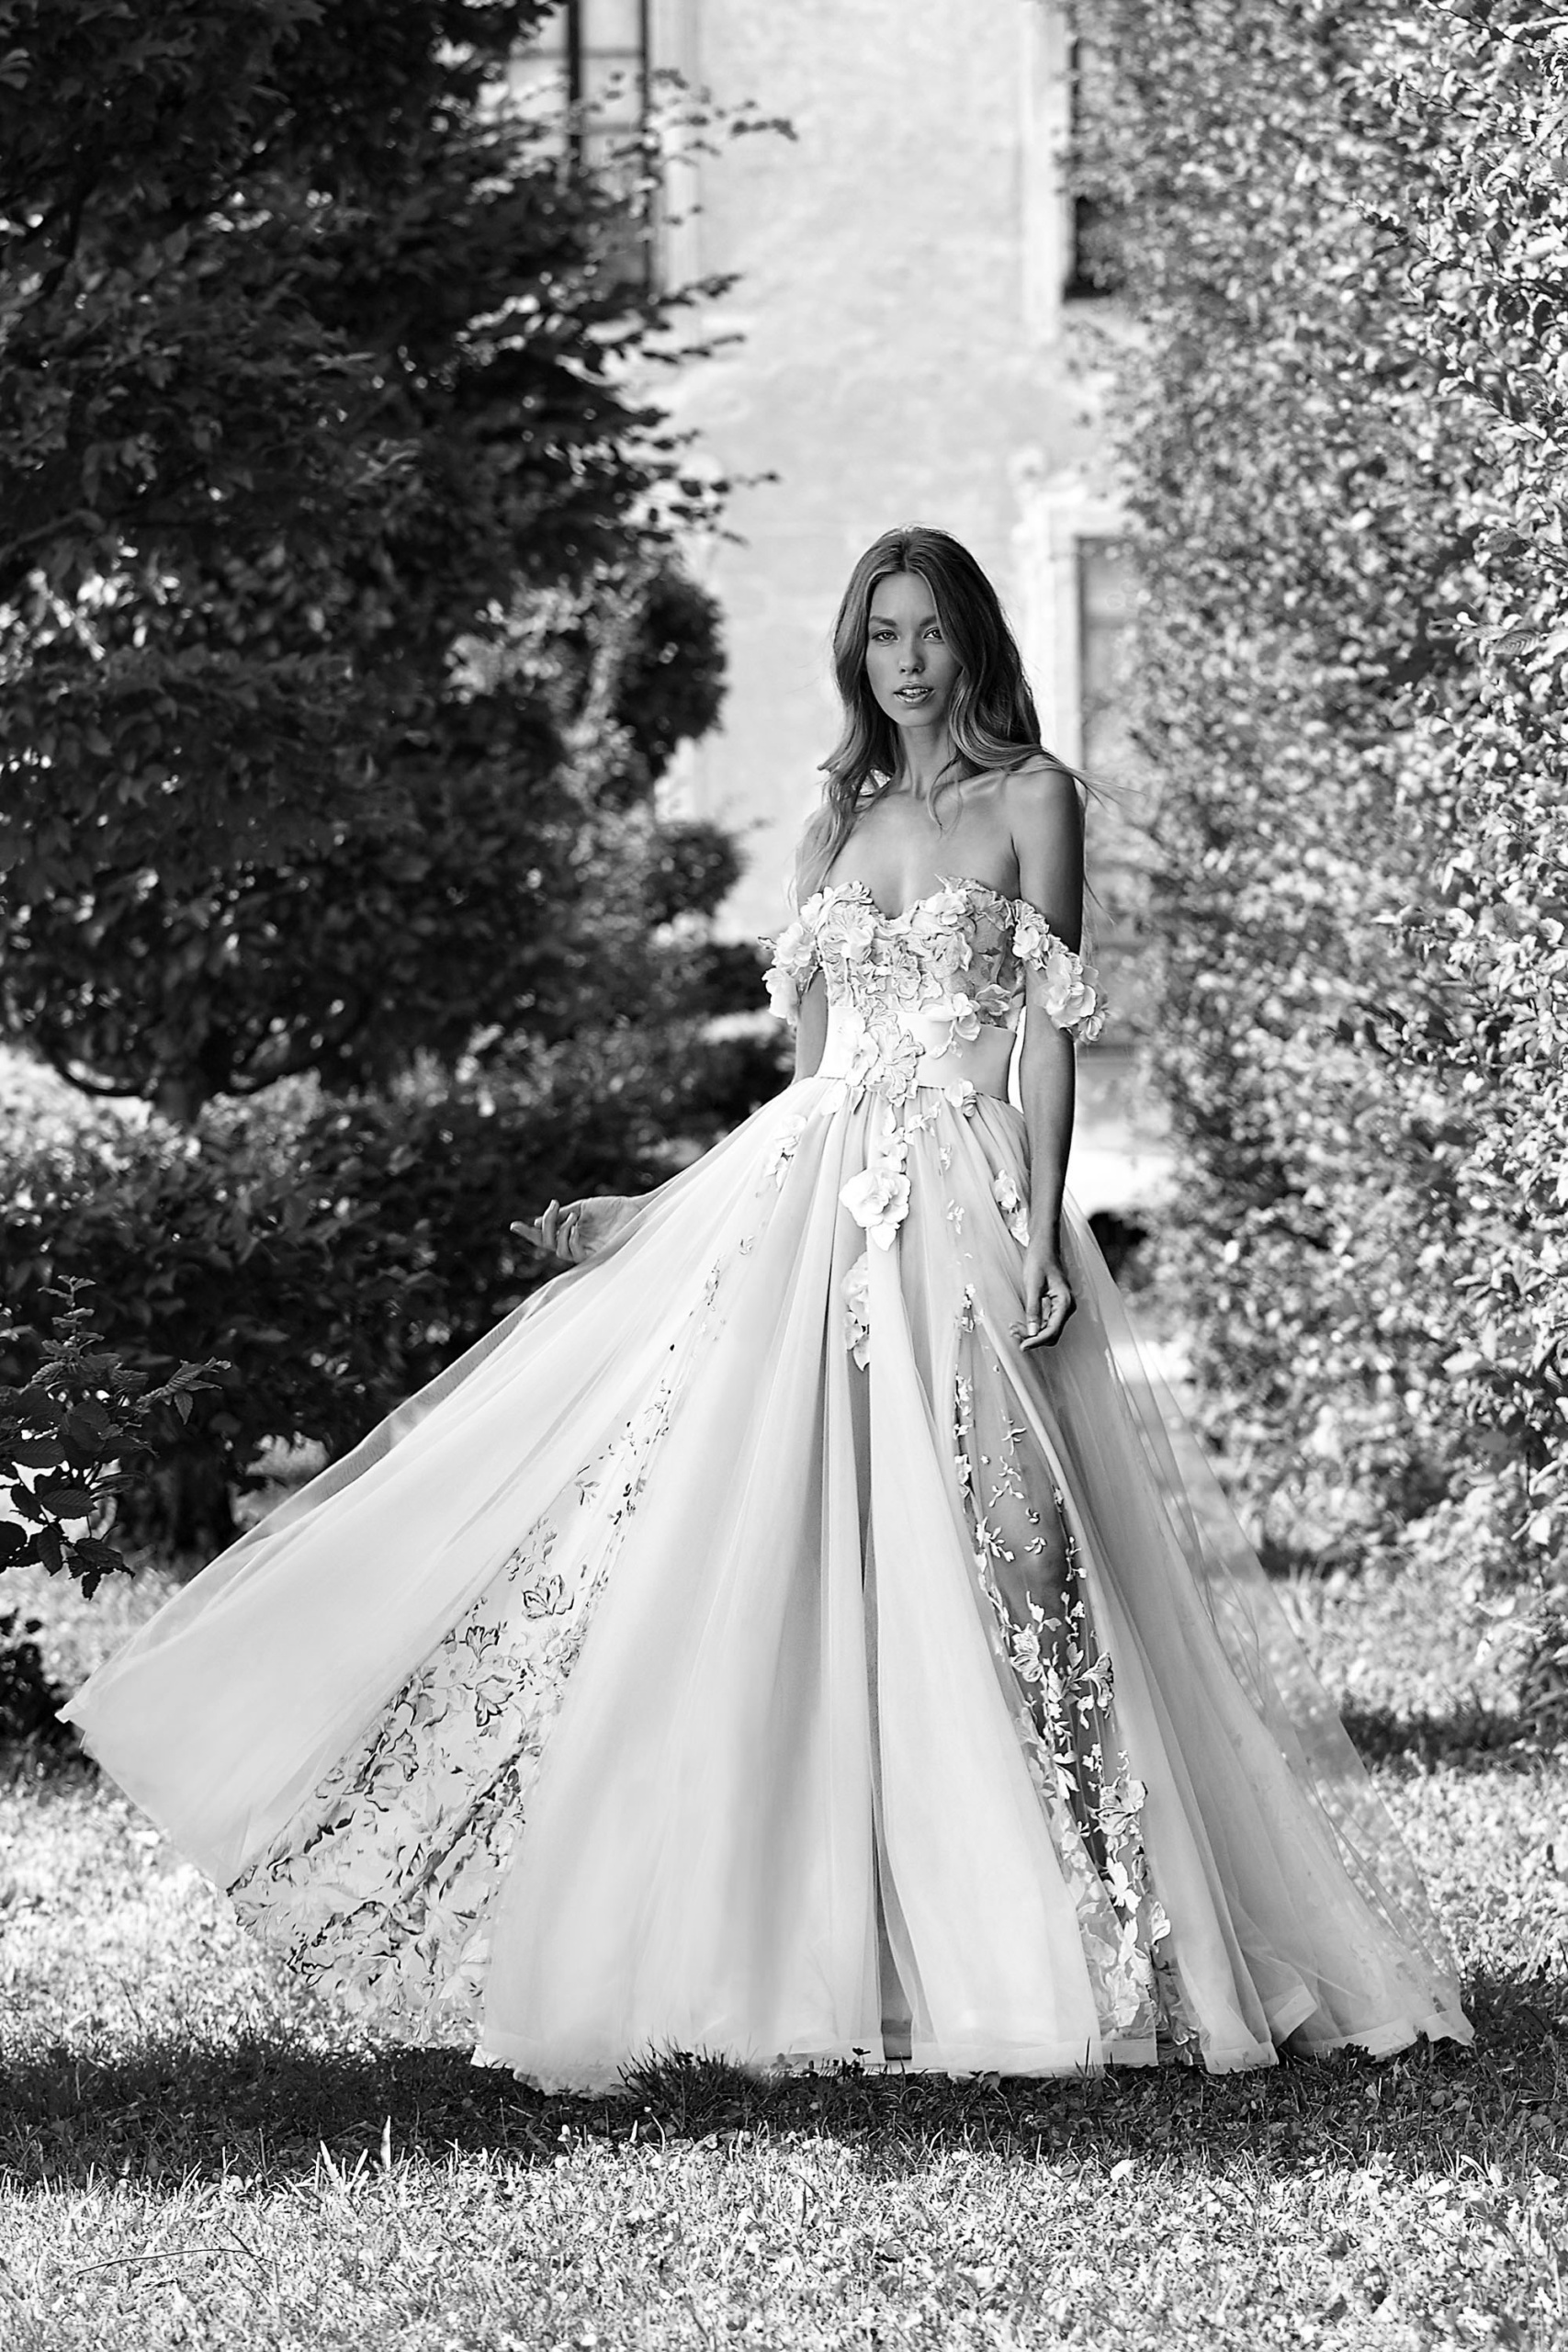 Amalfi Wedding Dresses: Where Exclusivity Wears Art, Fashion and Unparalleled Style - Stylish Elegance for a Dream Wedding